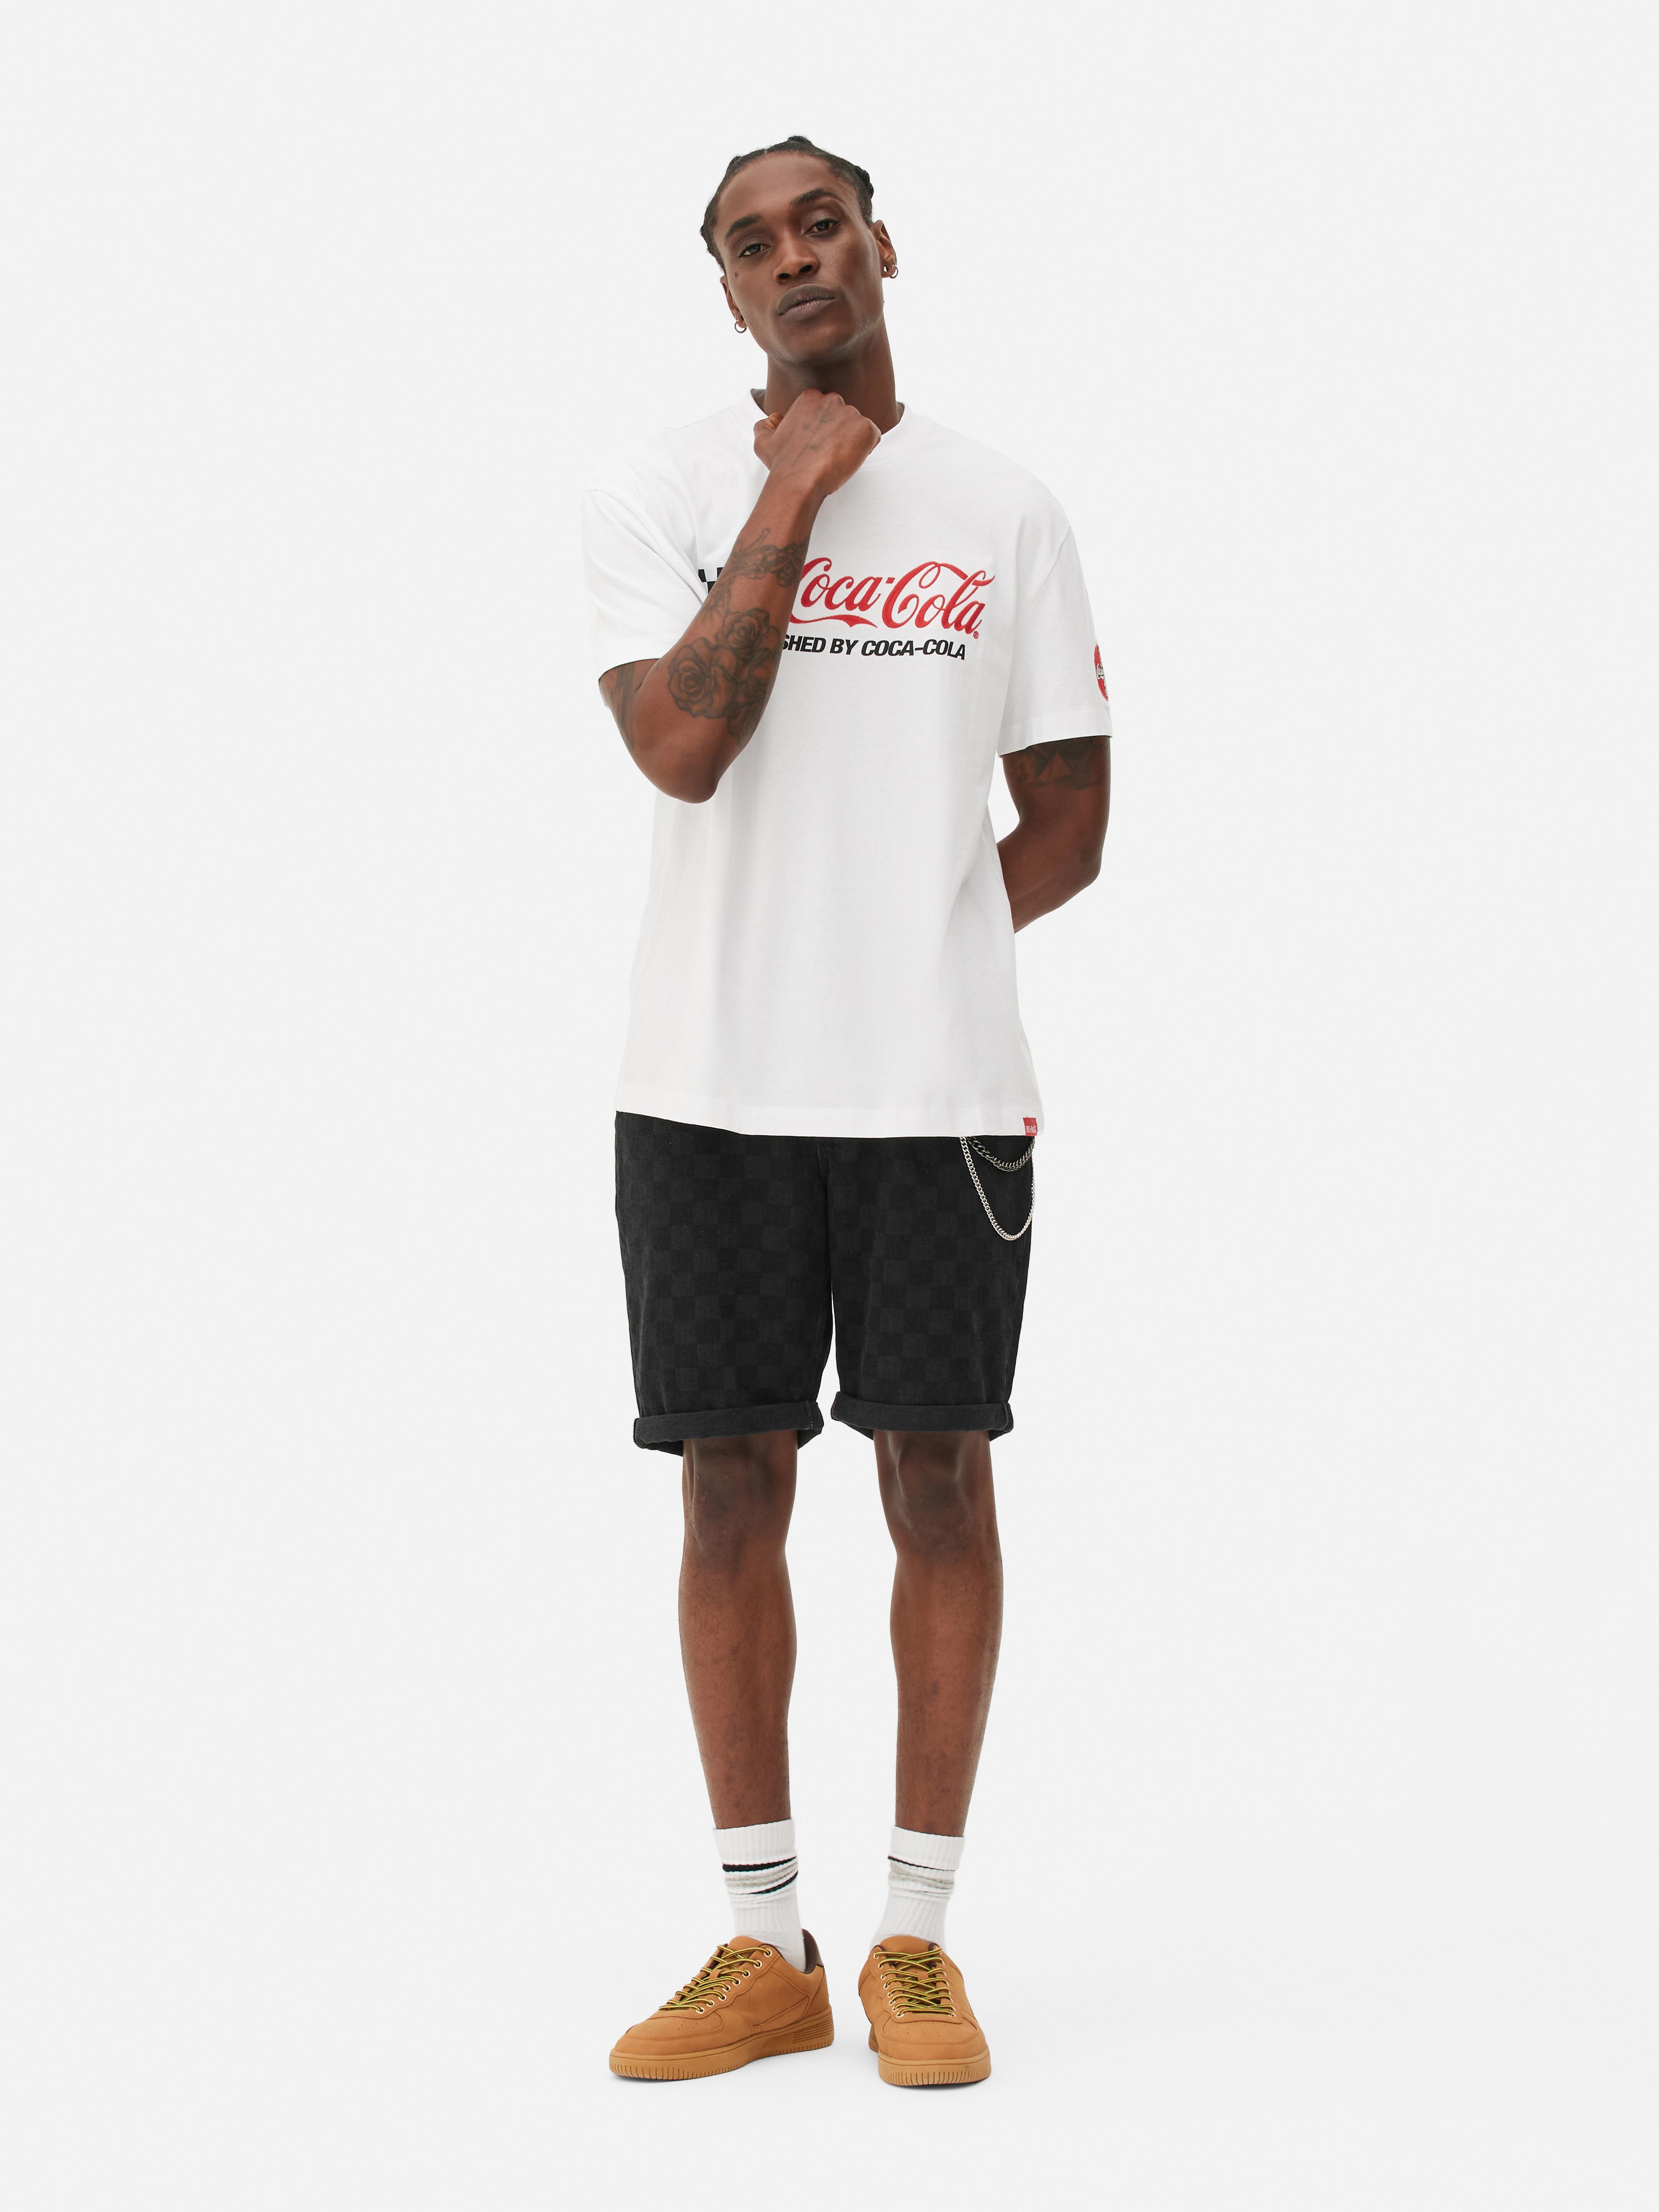 Coca-Cola Racing Printed T-Shirt | Penneys